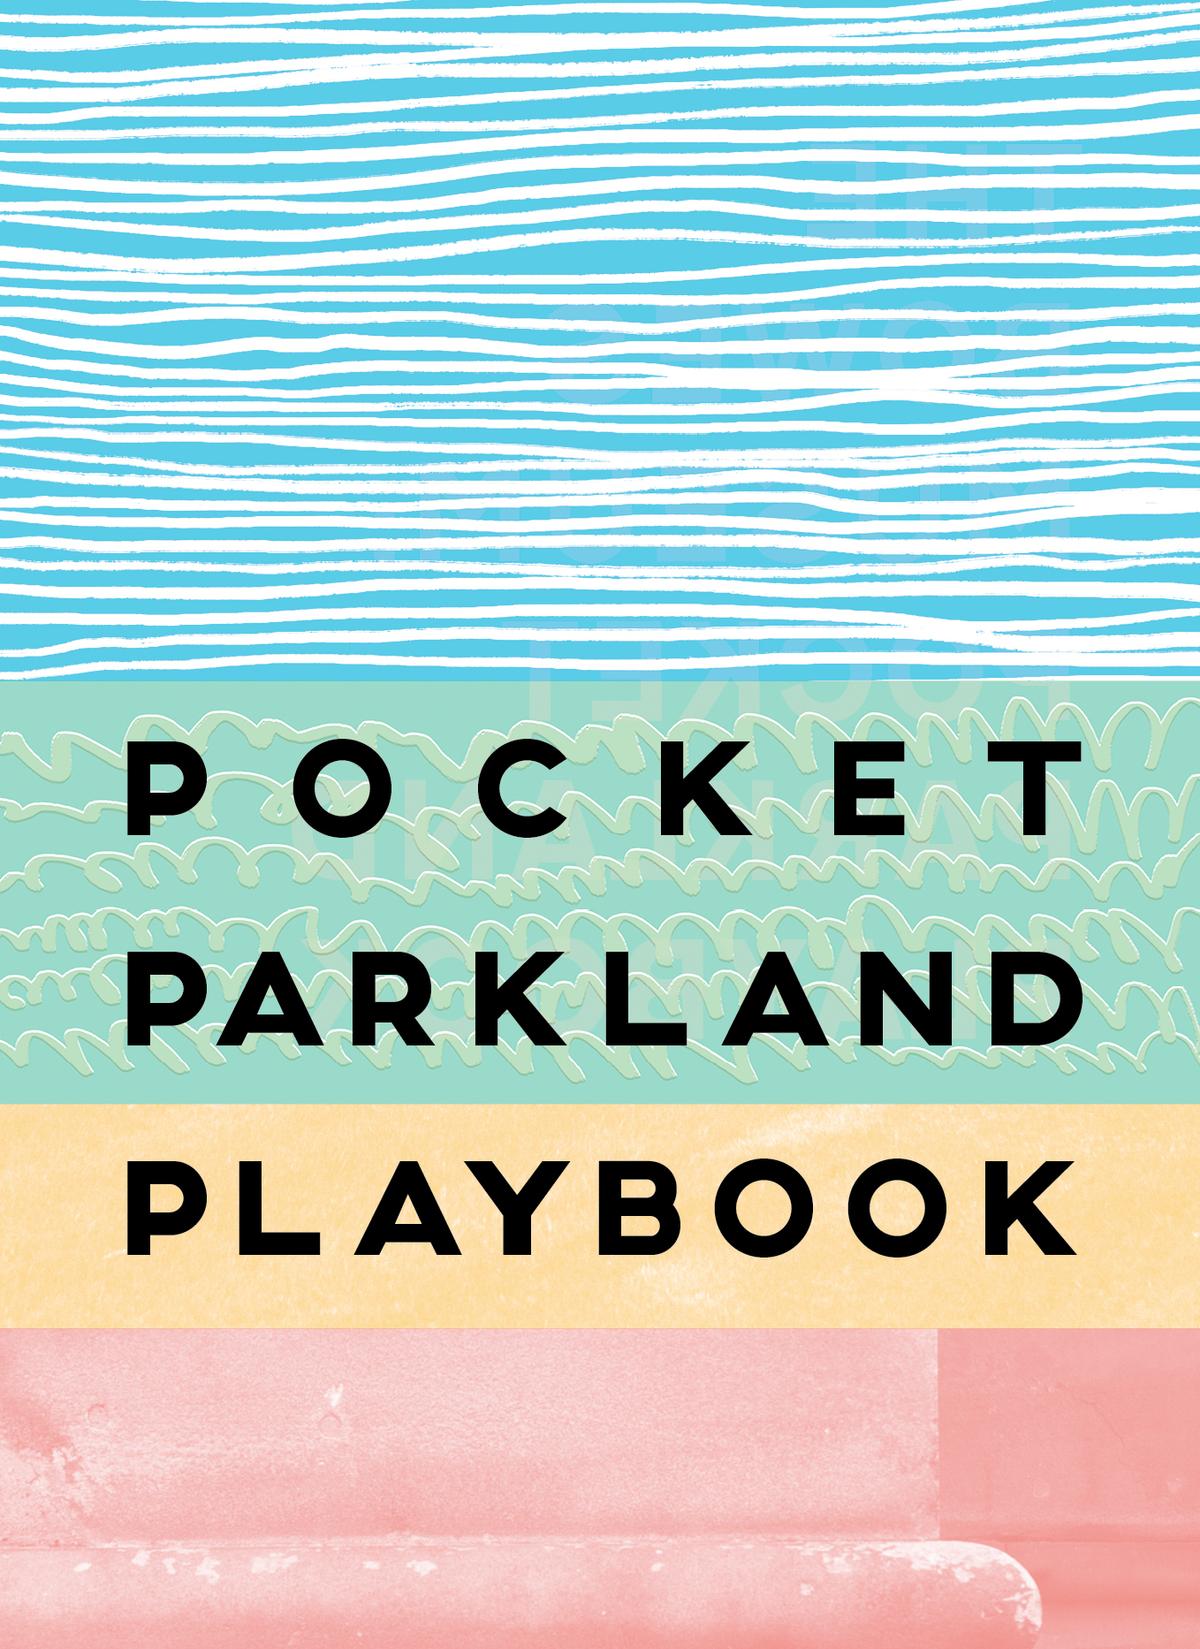 Pocket Parkland Playbook